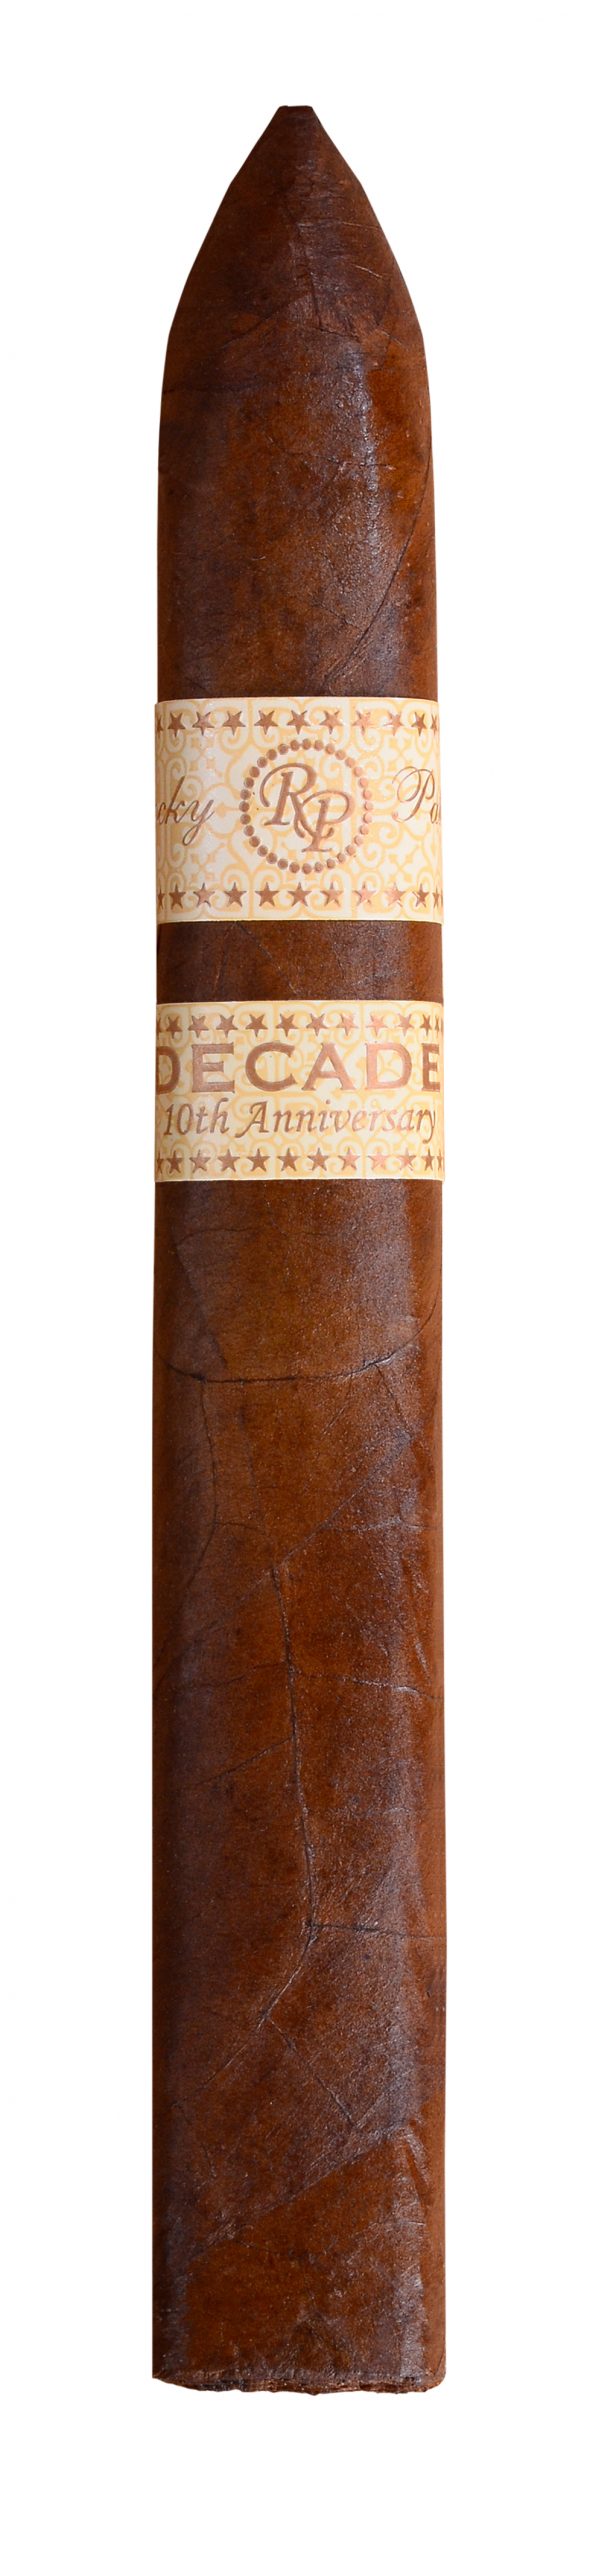 rocky patel decade torpedo single cigar